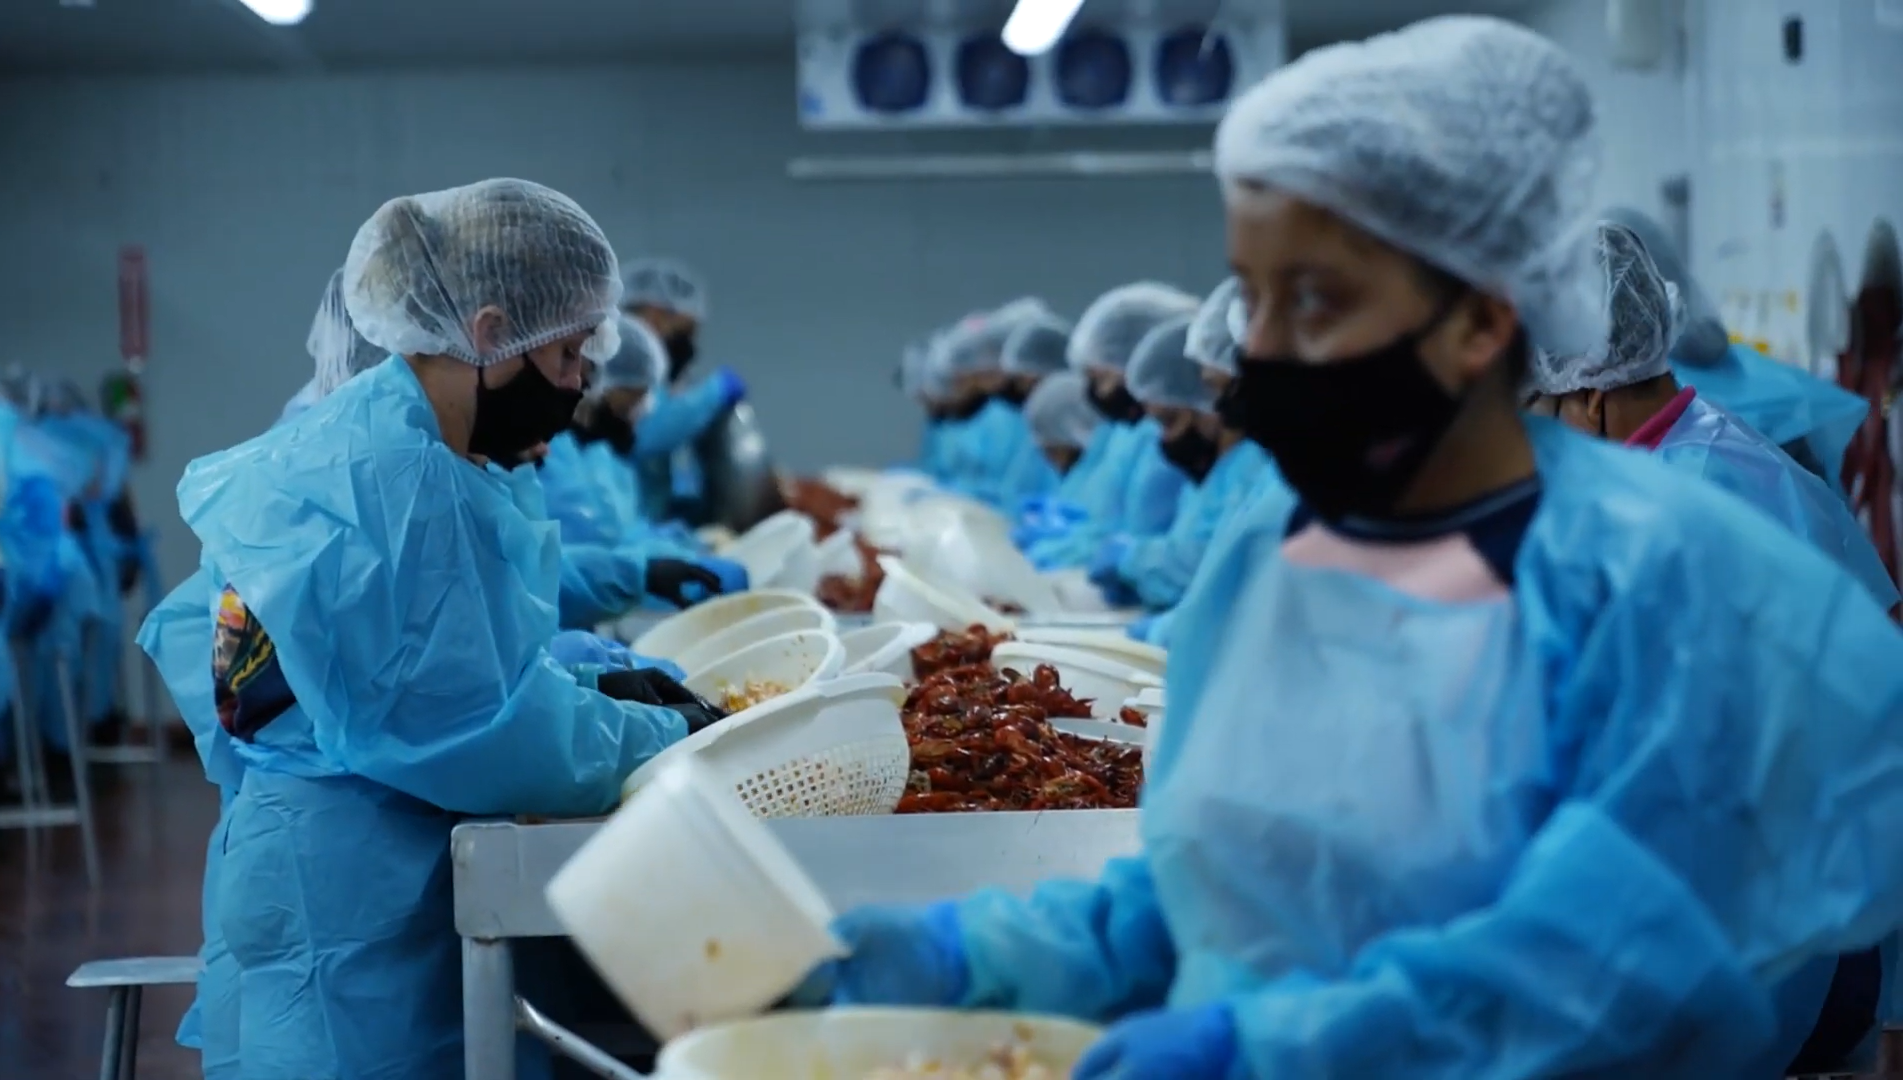 Group of people peeling crawfish in a processing room.